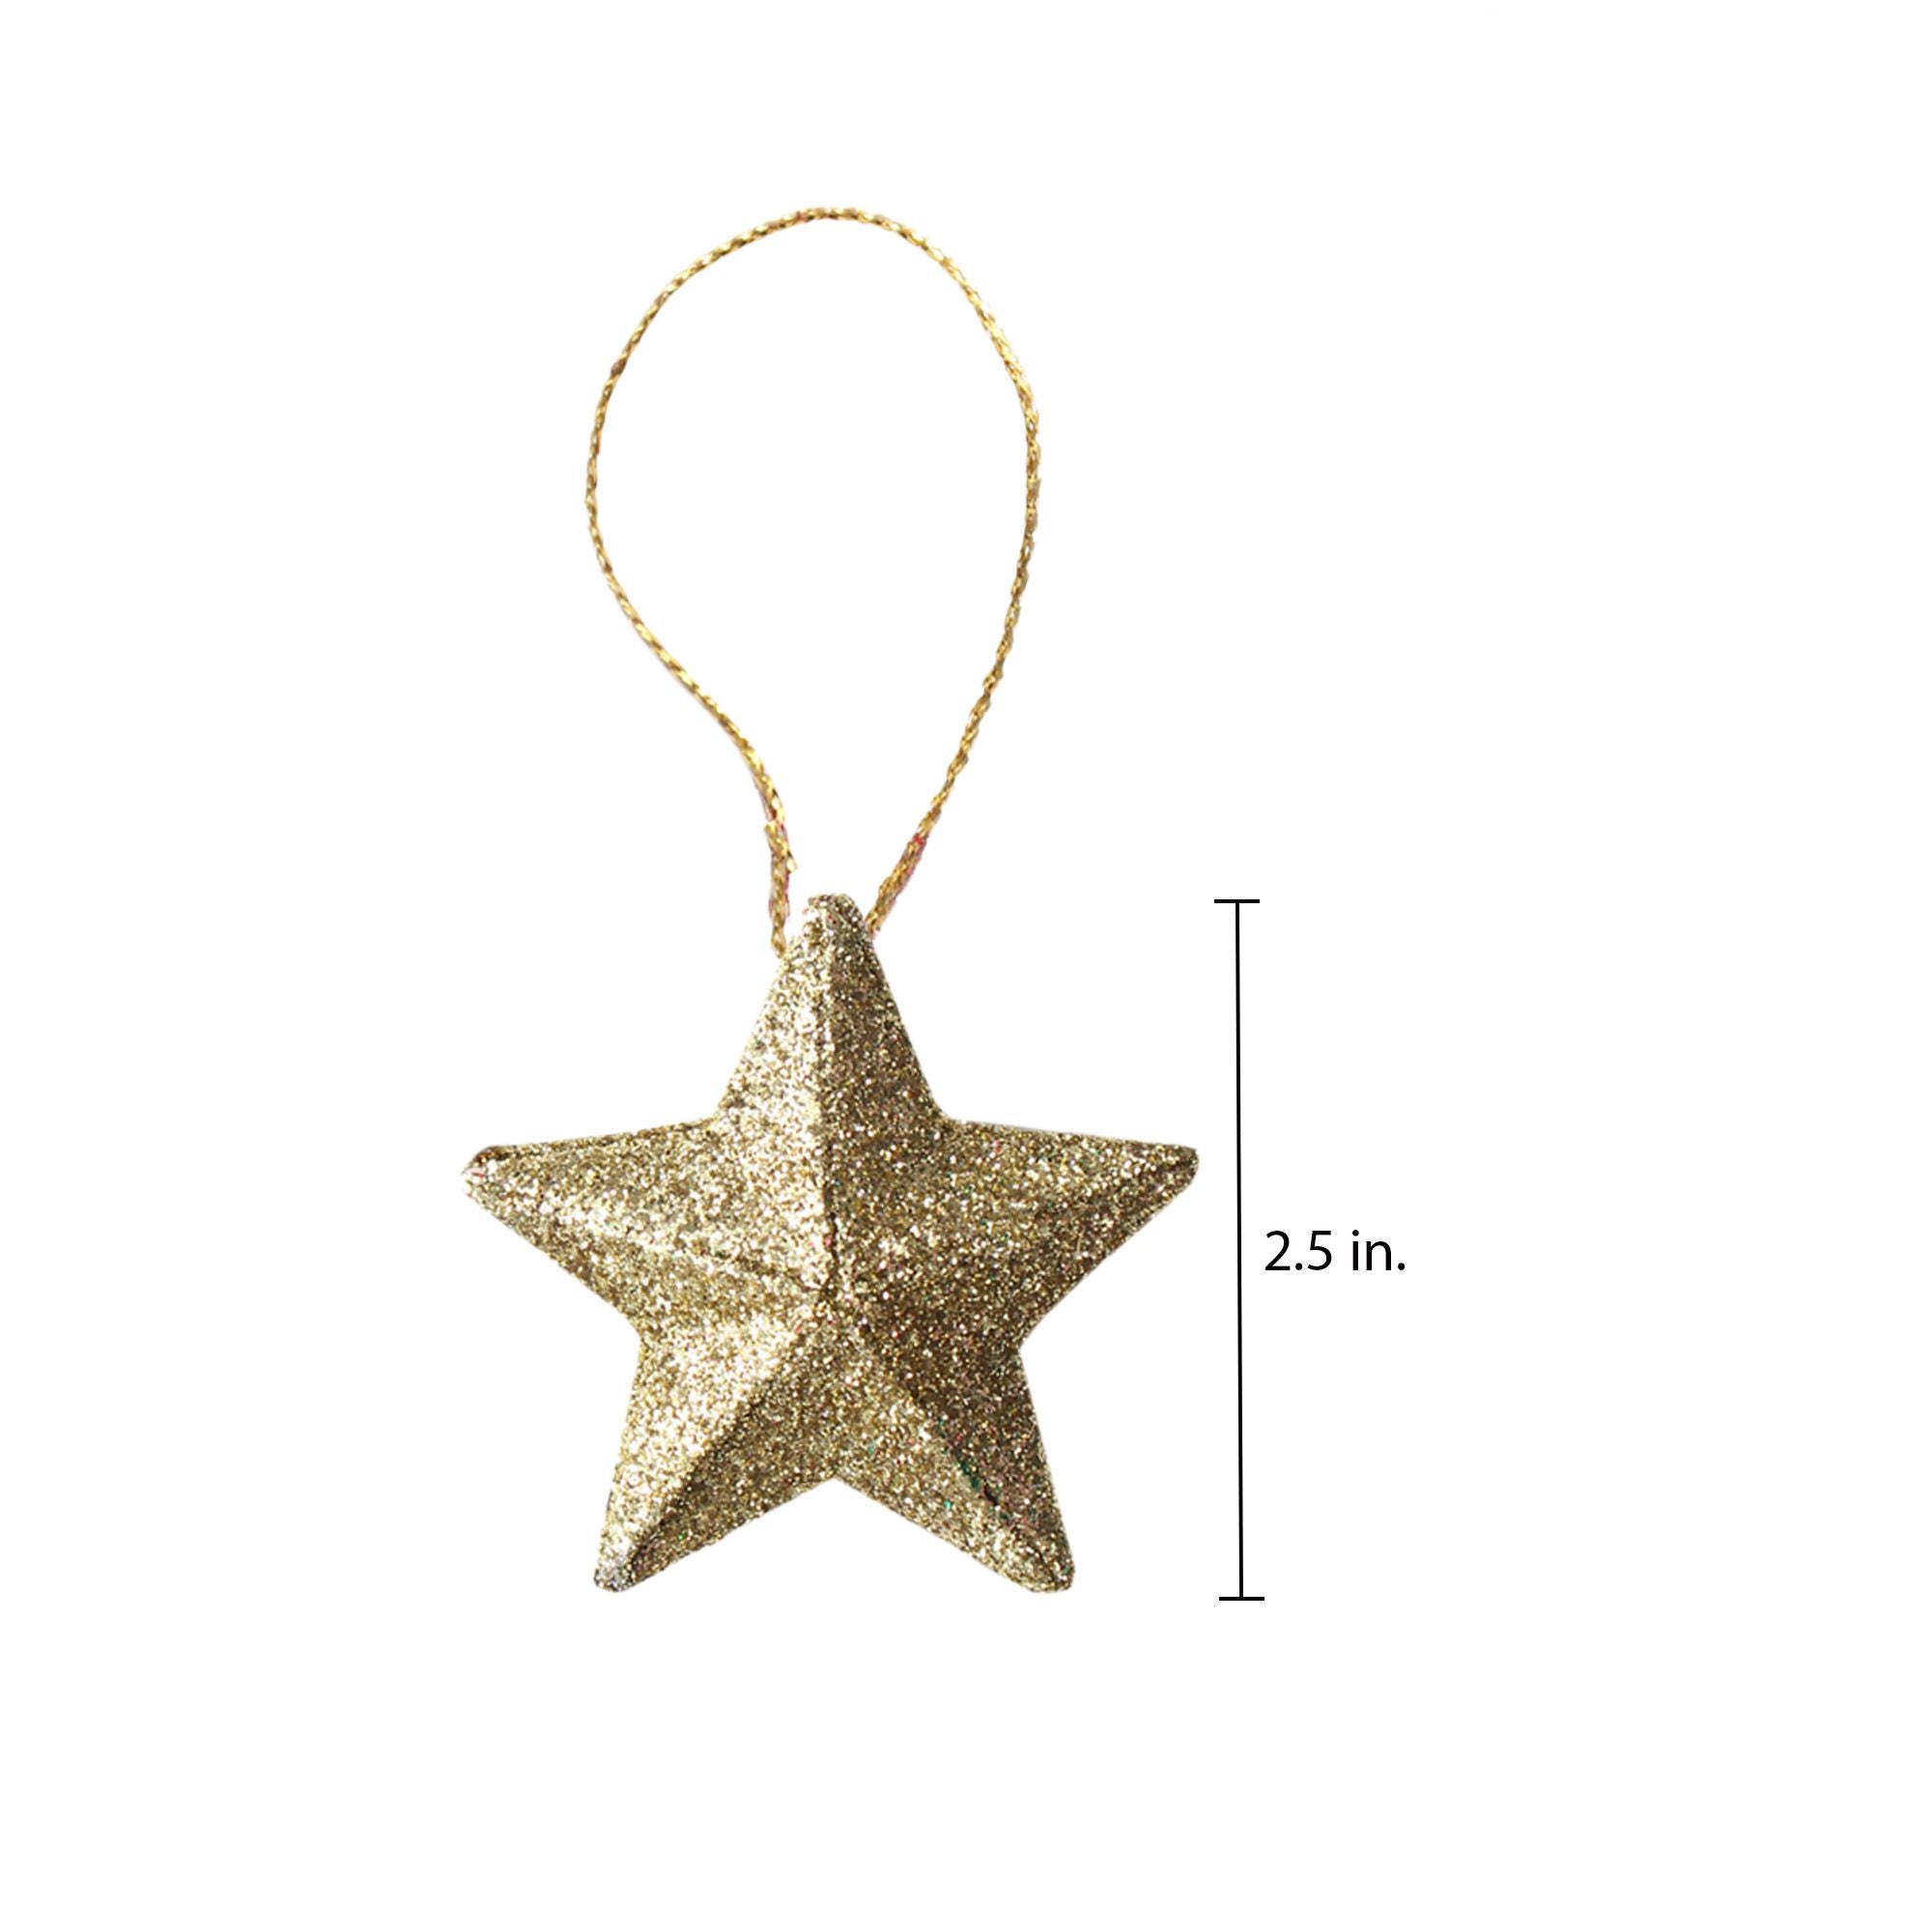 Handmade Christmas Ornaments - 3D Glitter Stars, 2.5inch, Gold, 6pc